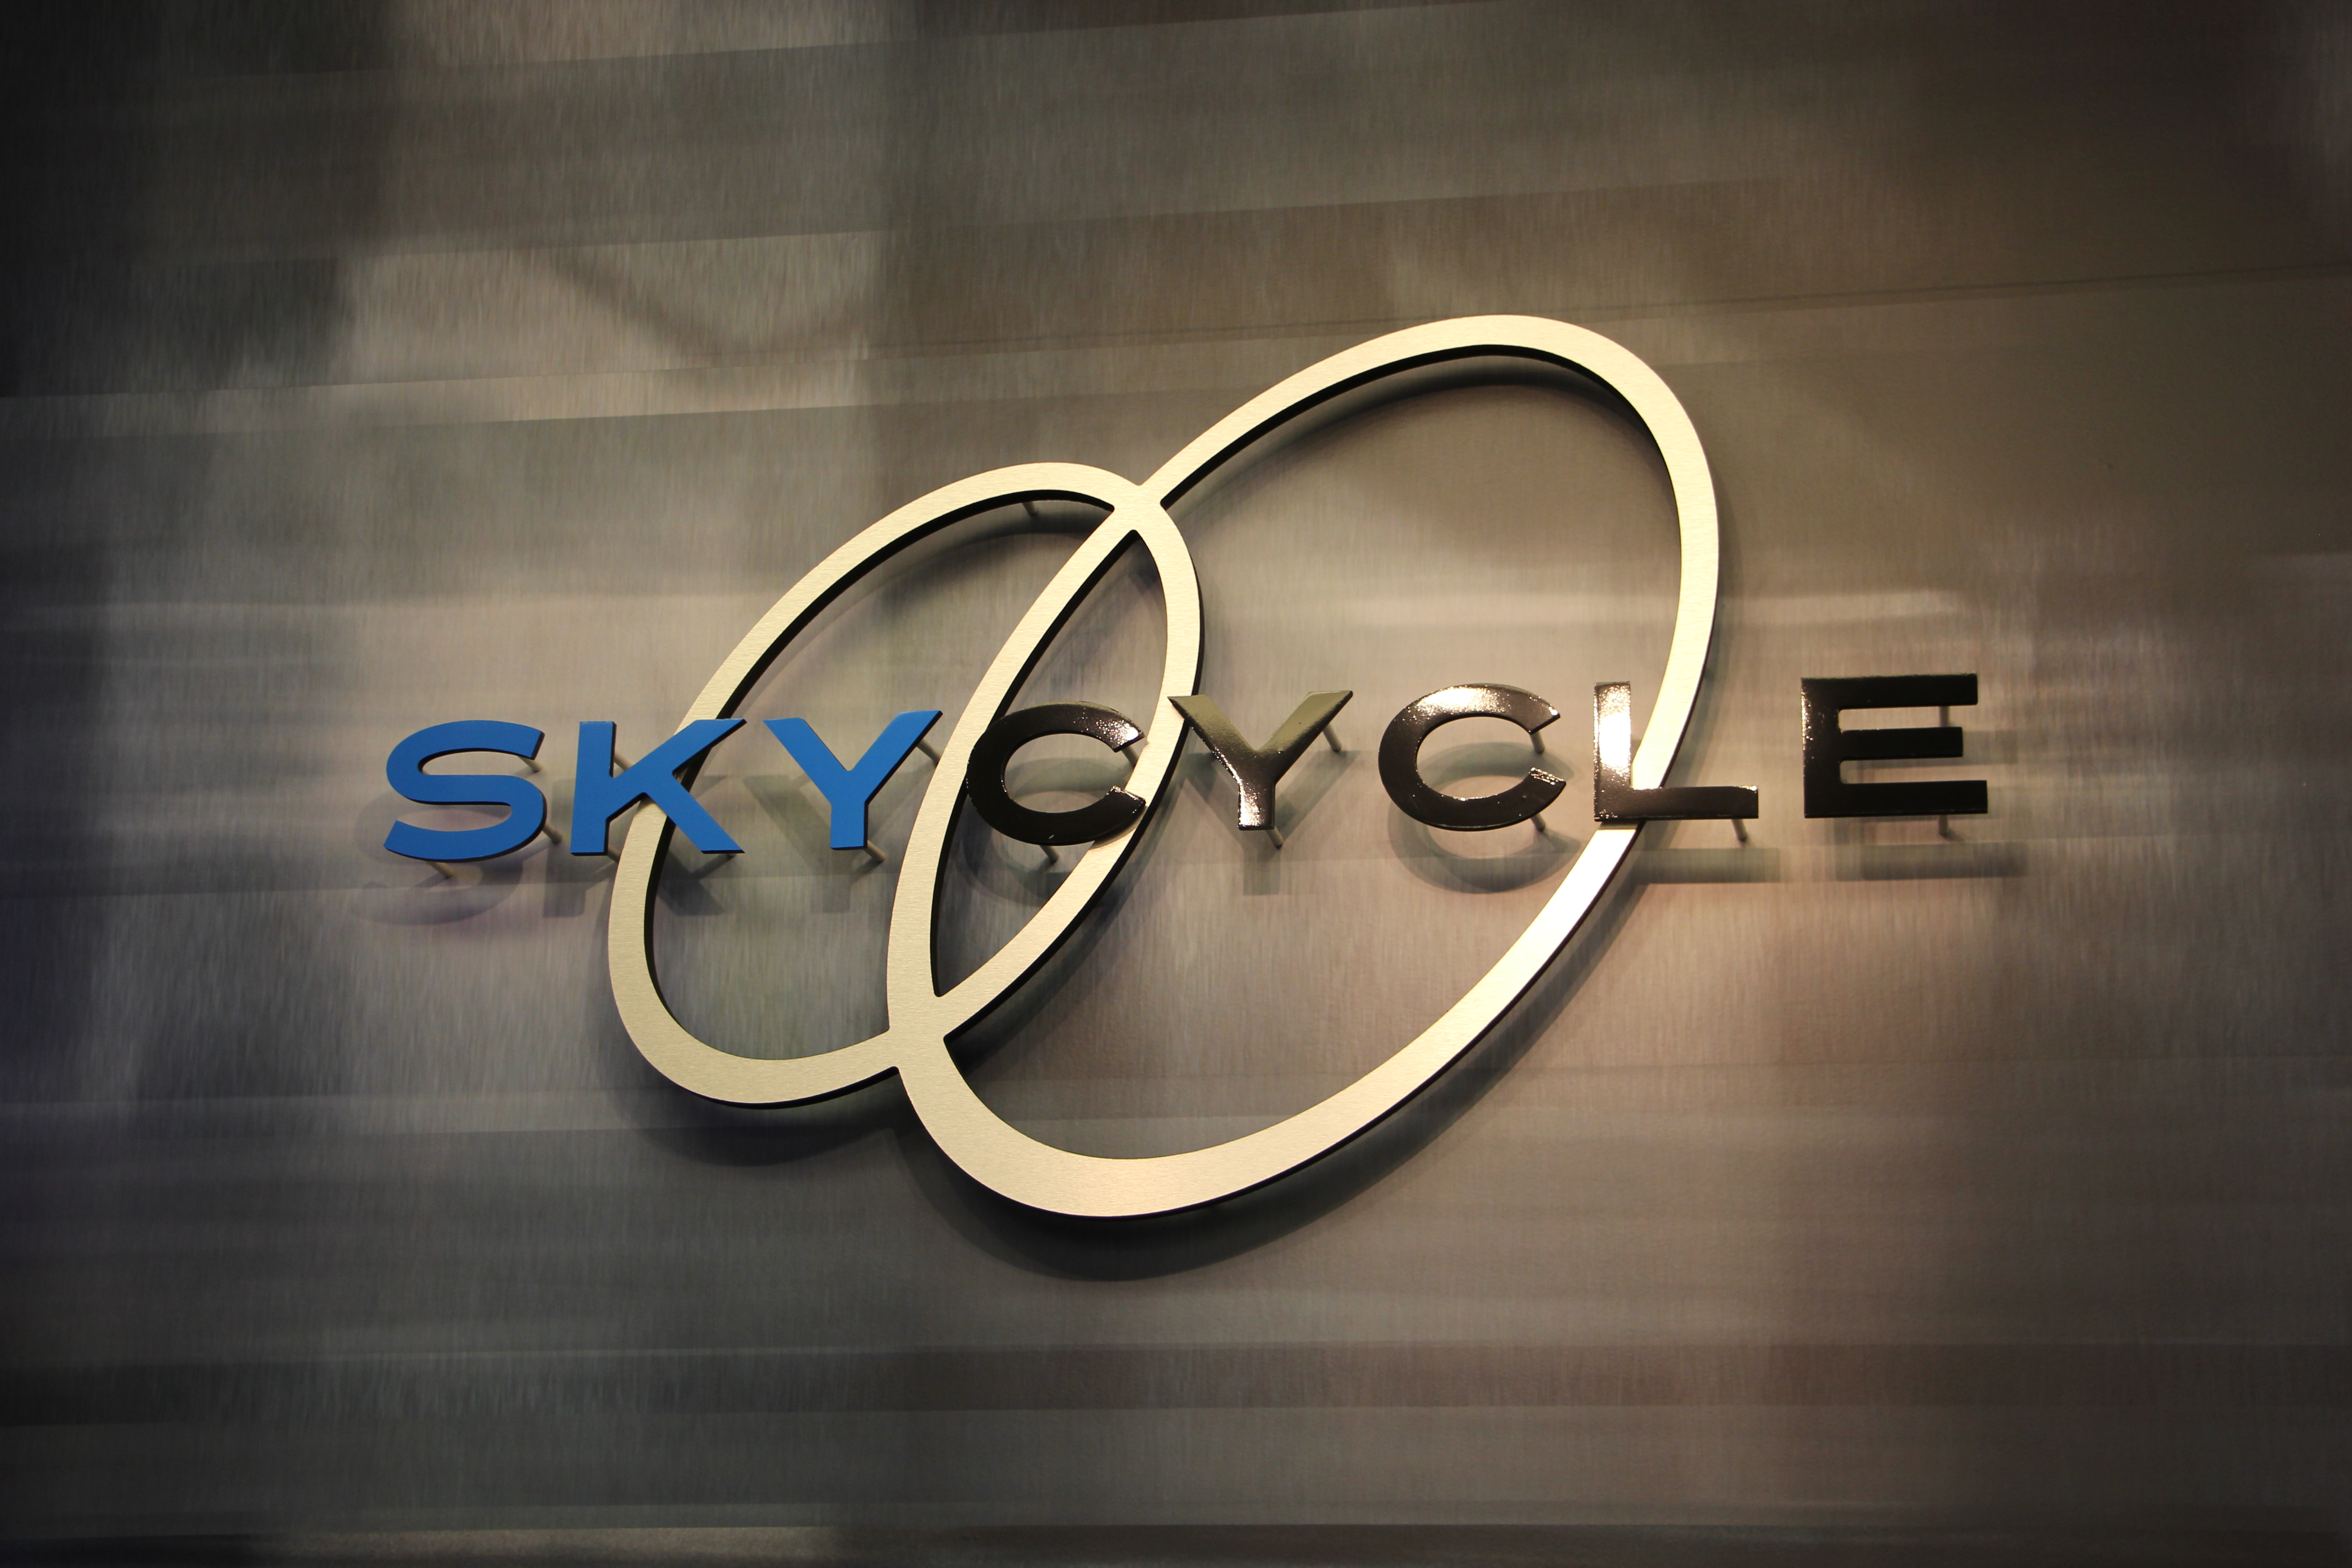 SkyCycle